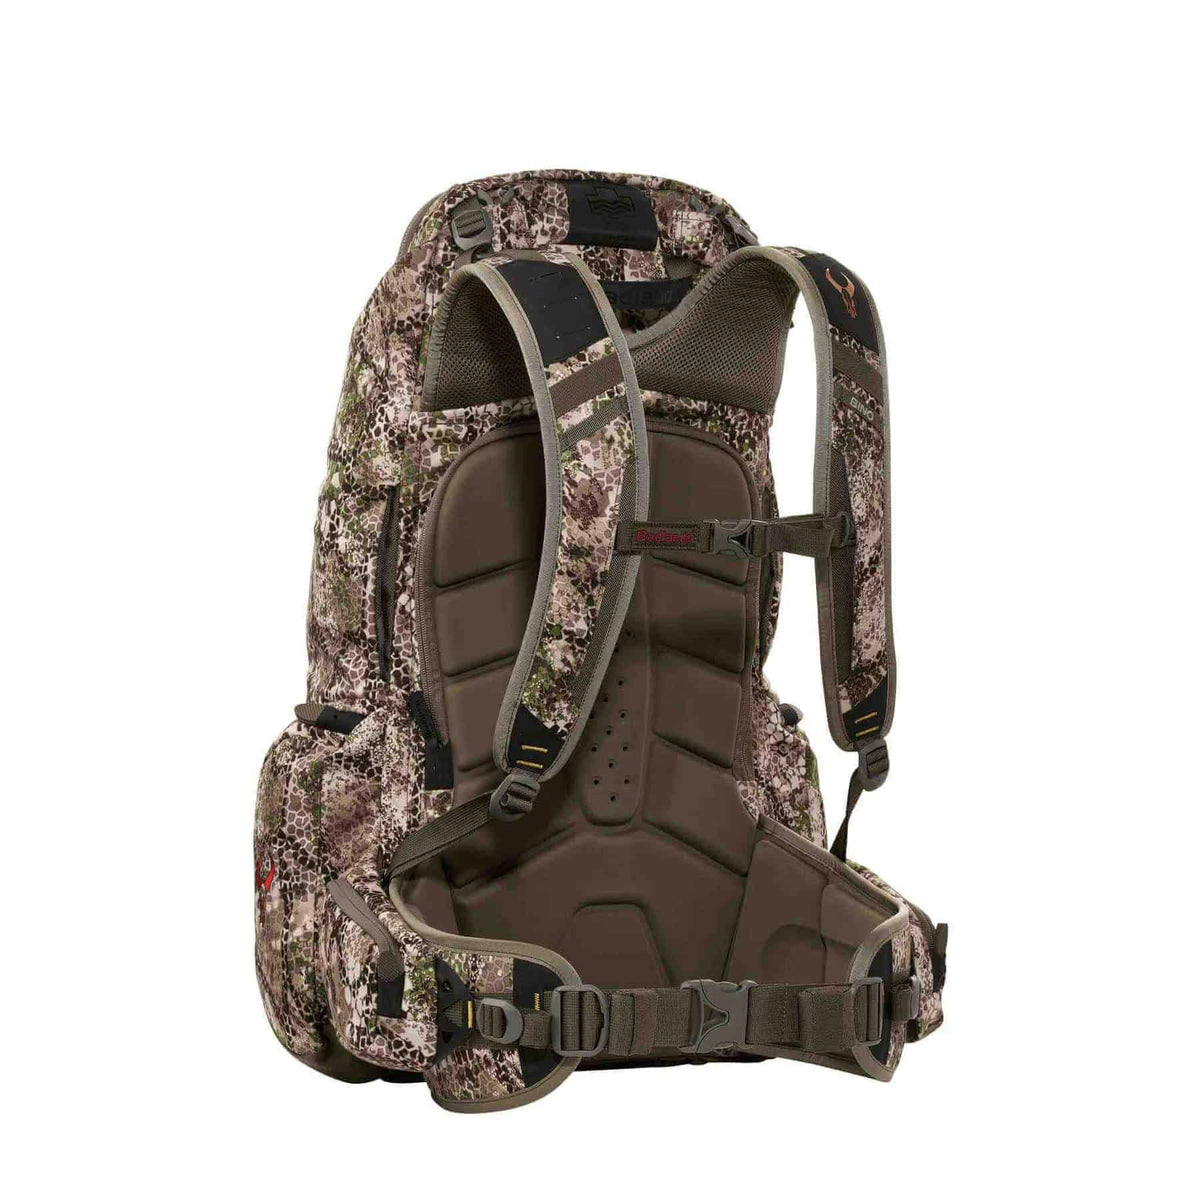 Badlands Packs 2200 Hunting Backpack 2020 Model Approach Camo Front